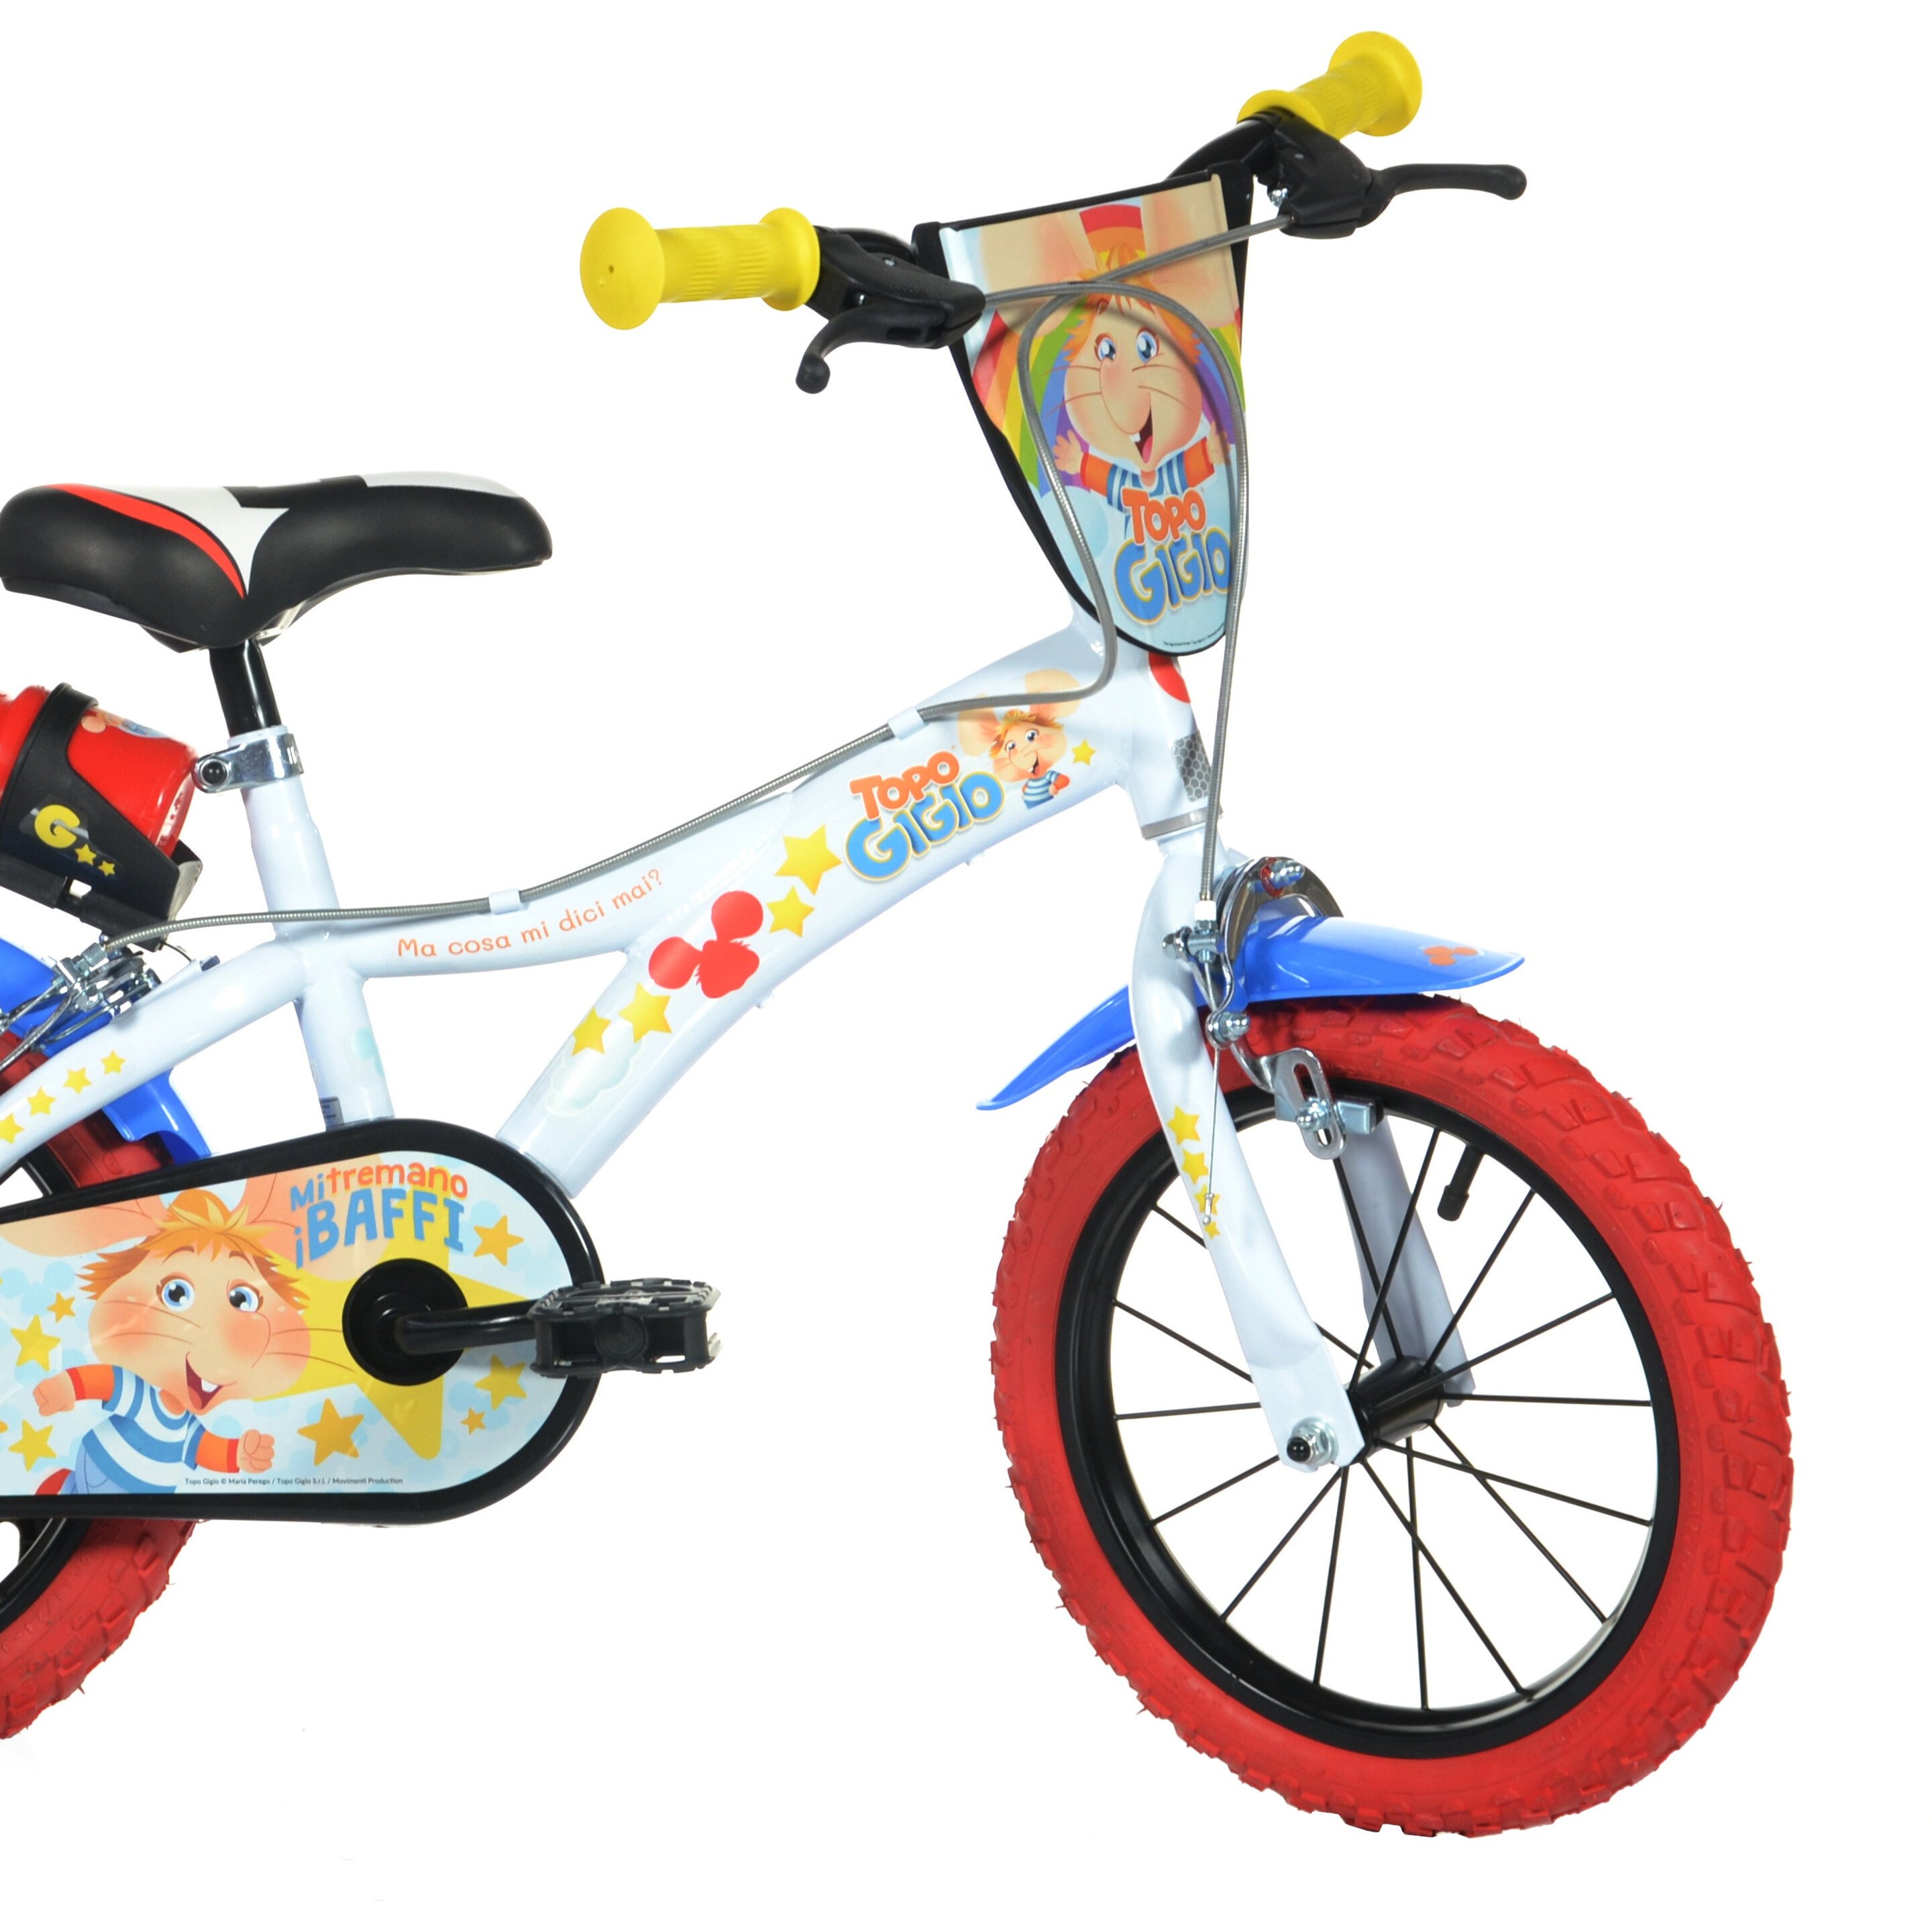 Bicicleta Infantil Topo Gigio 14 Pulgadas